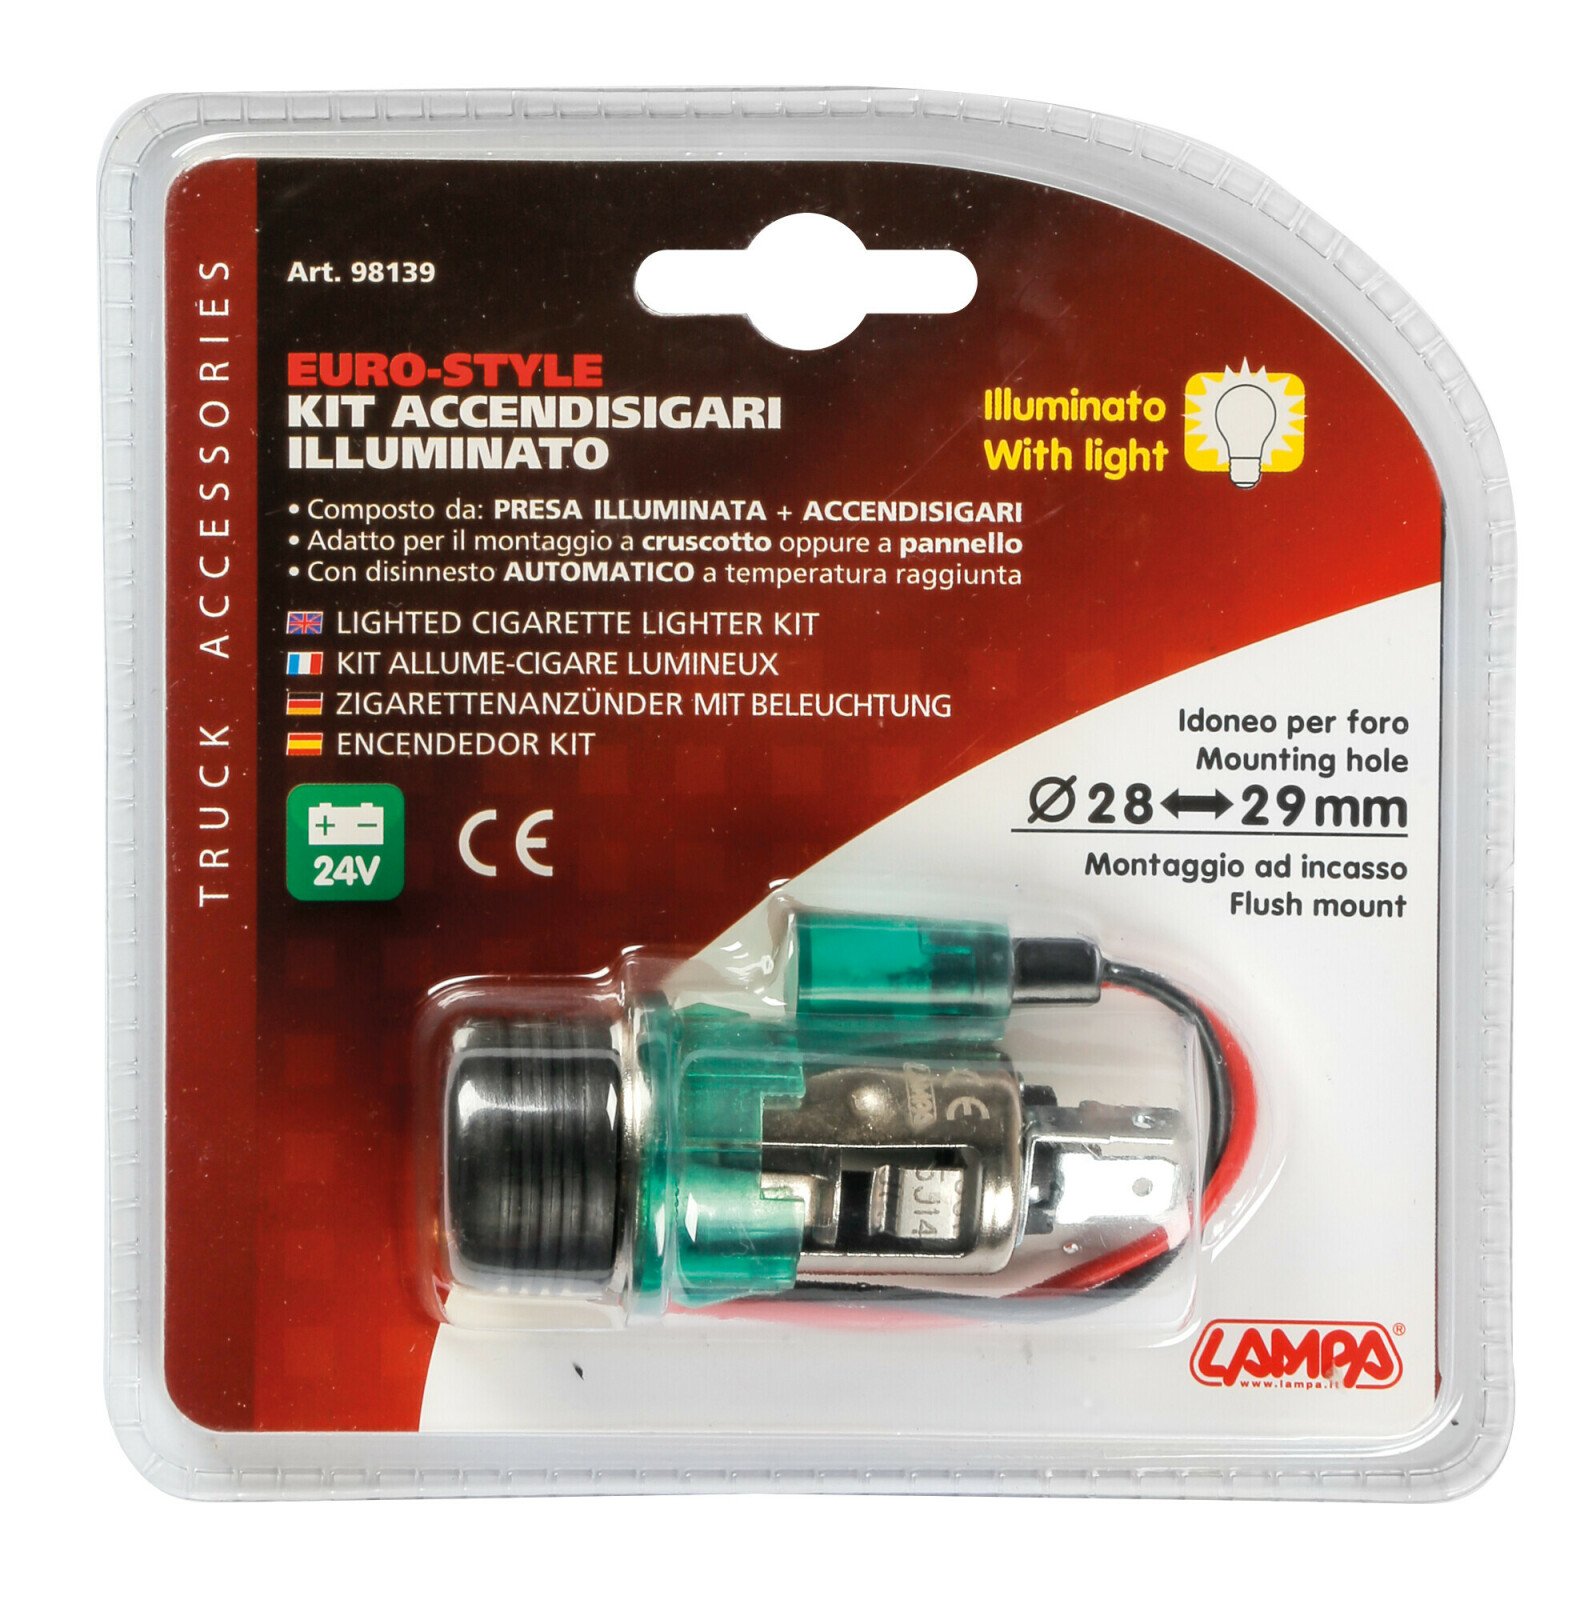 Euro-Style illuminated cigarette lighter kit, 24V thumb